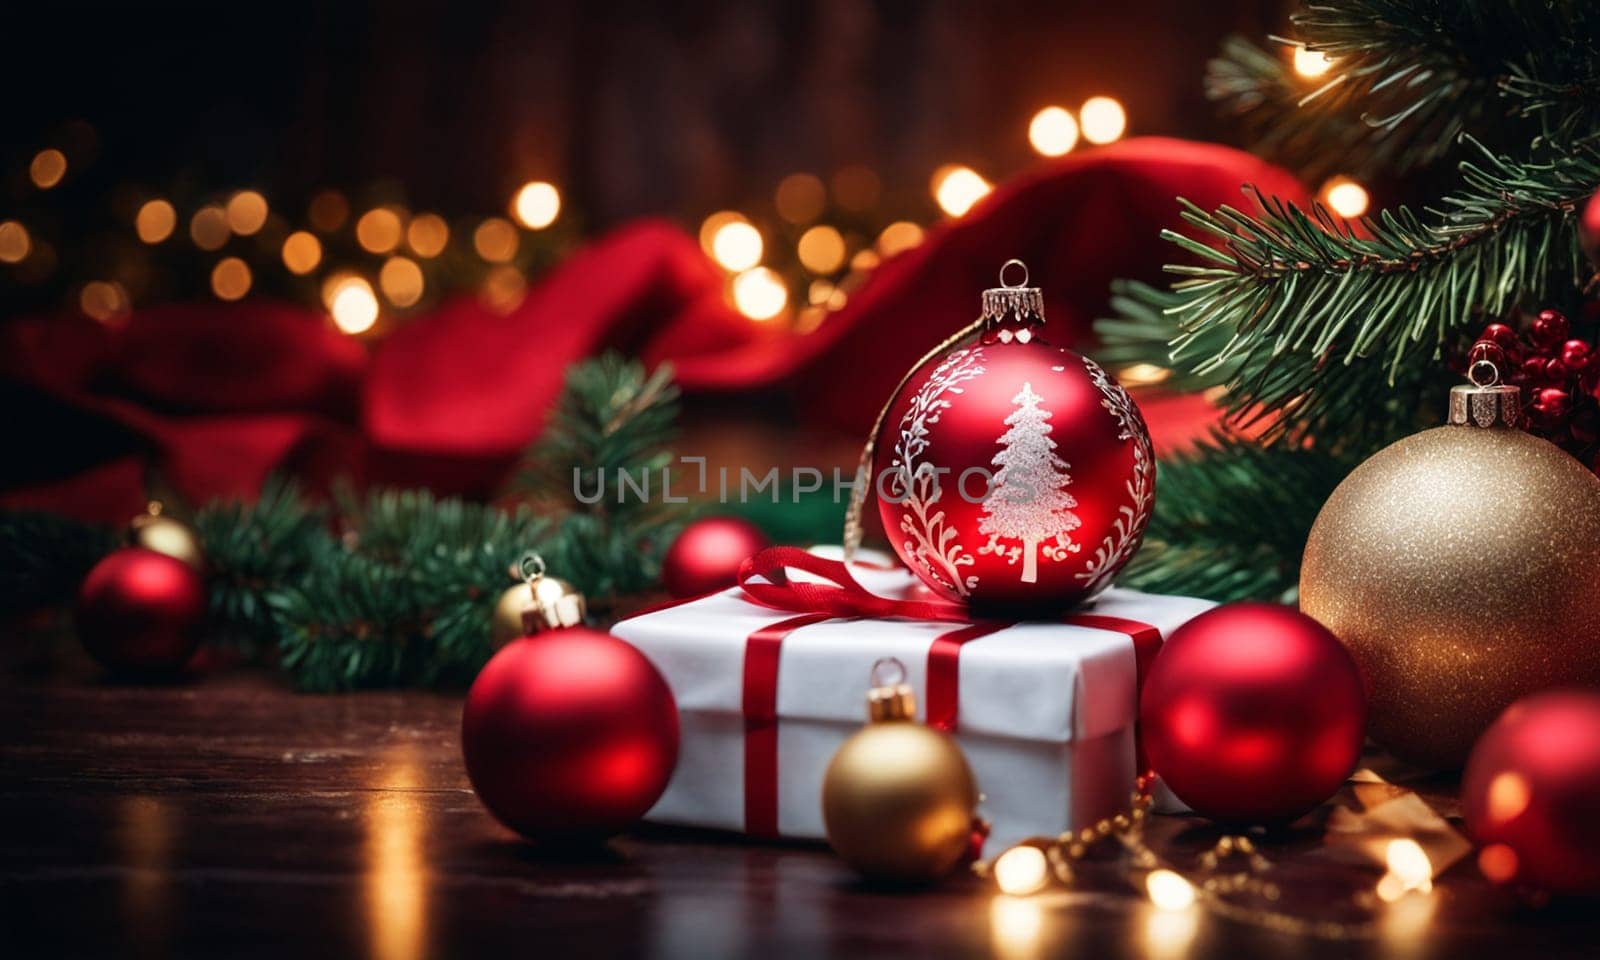 Beautiful Christmas card by NeuroSky